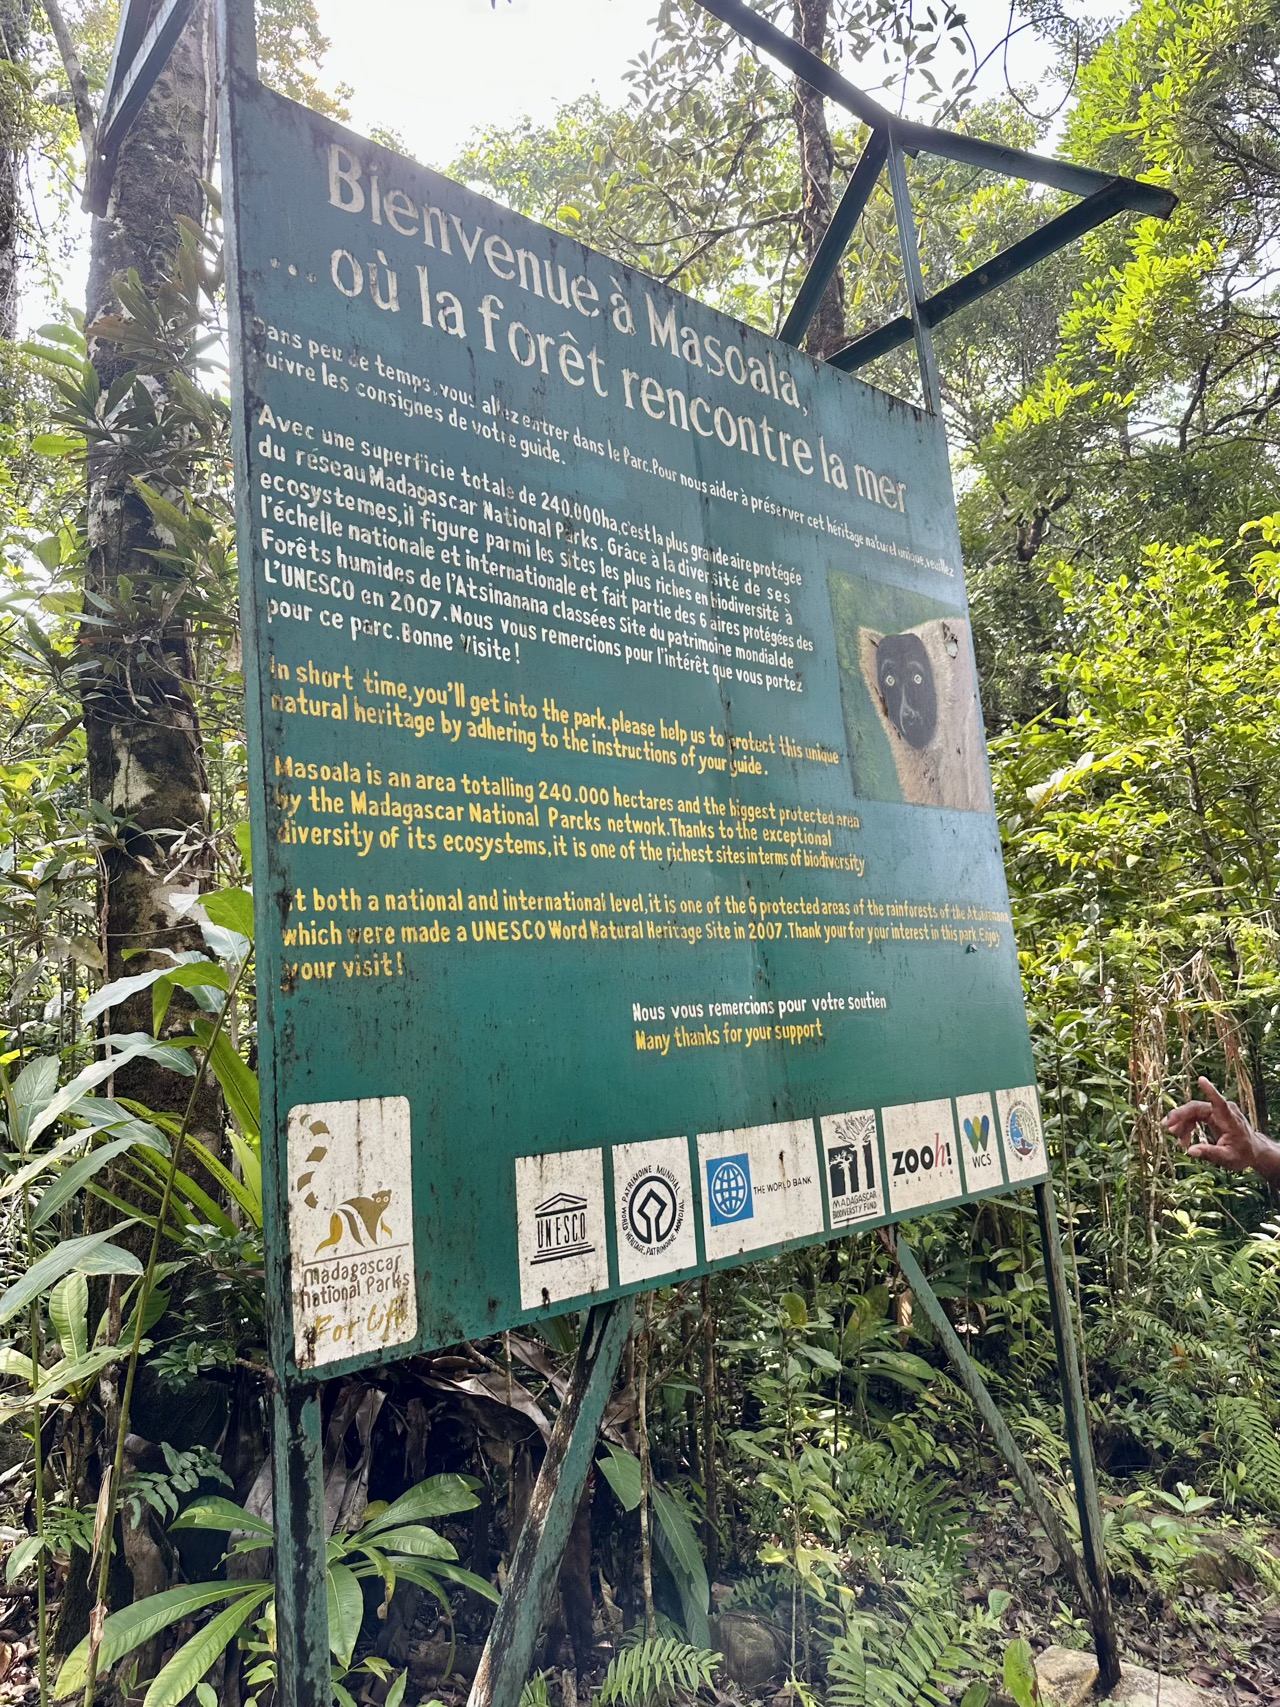 The sign at Masoala National Park